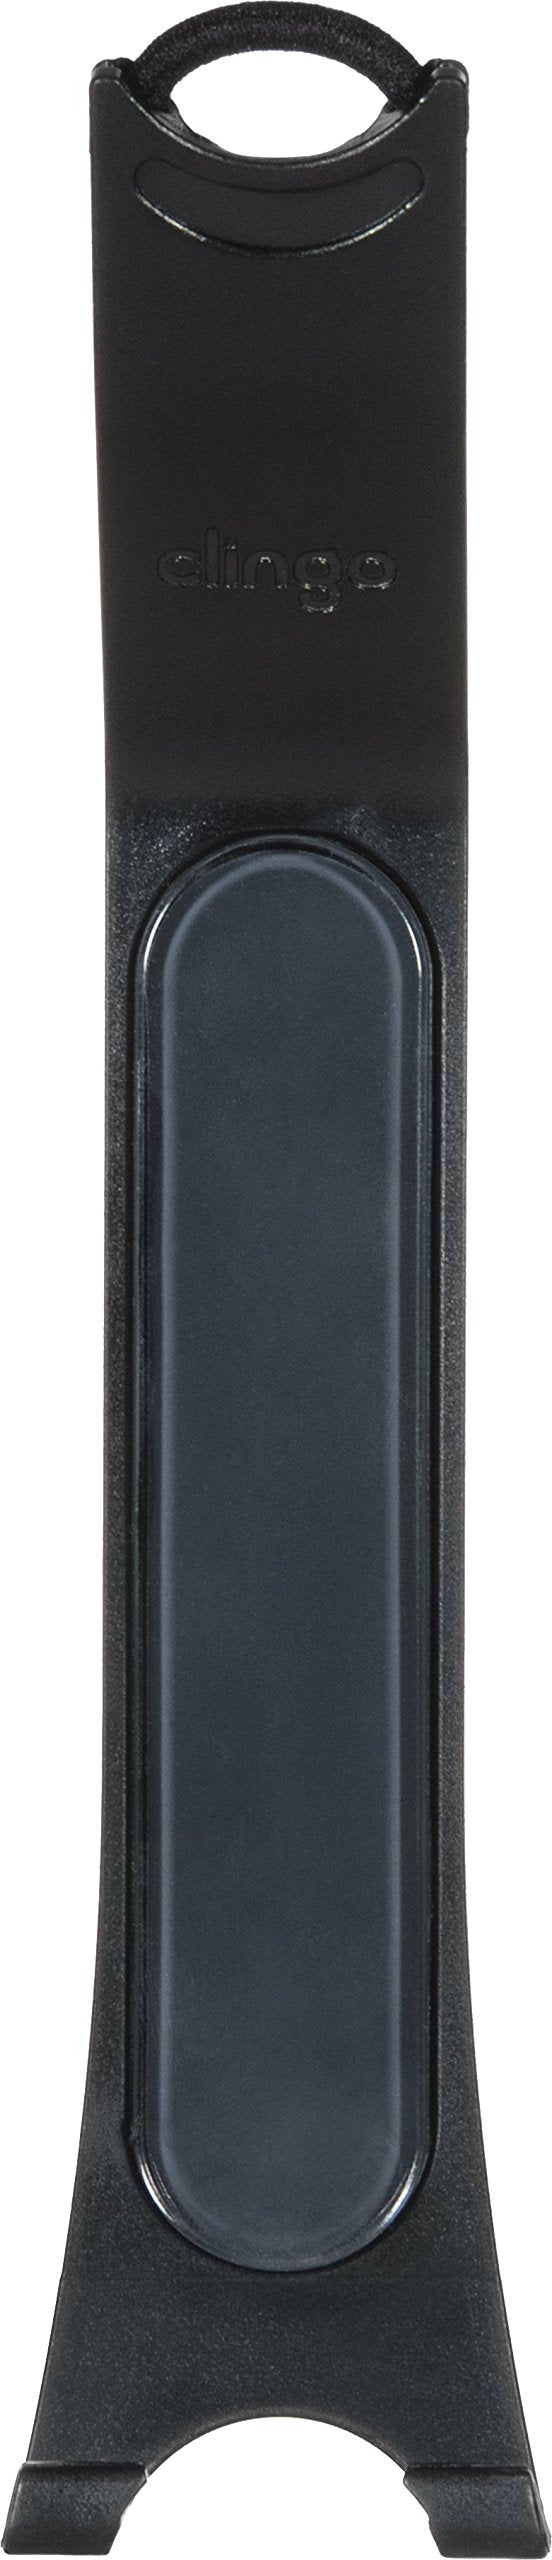  [AUSTRALIA] - Allsop Clingo Universal Cell Phone Mount Car Mirror Hanger (31015) Mirror Hanger Mount Standard Packaging